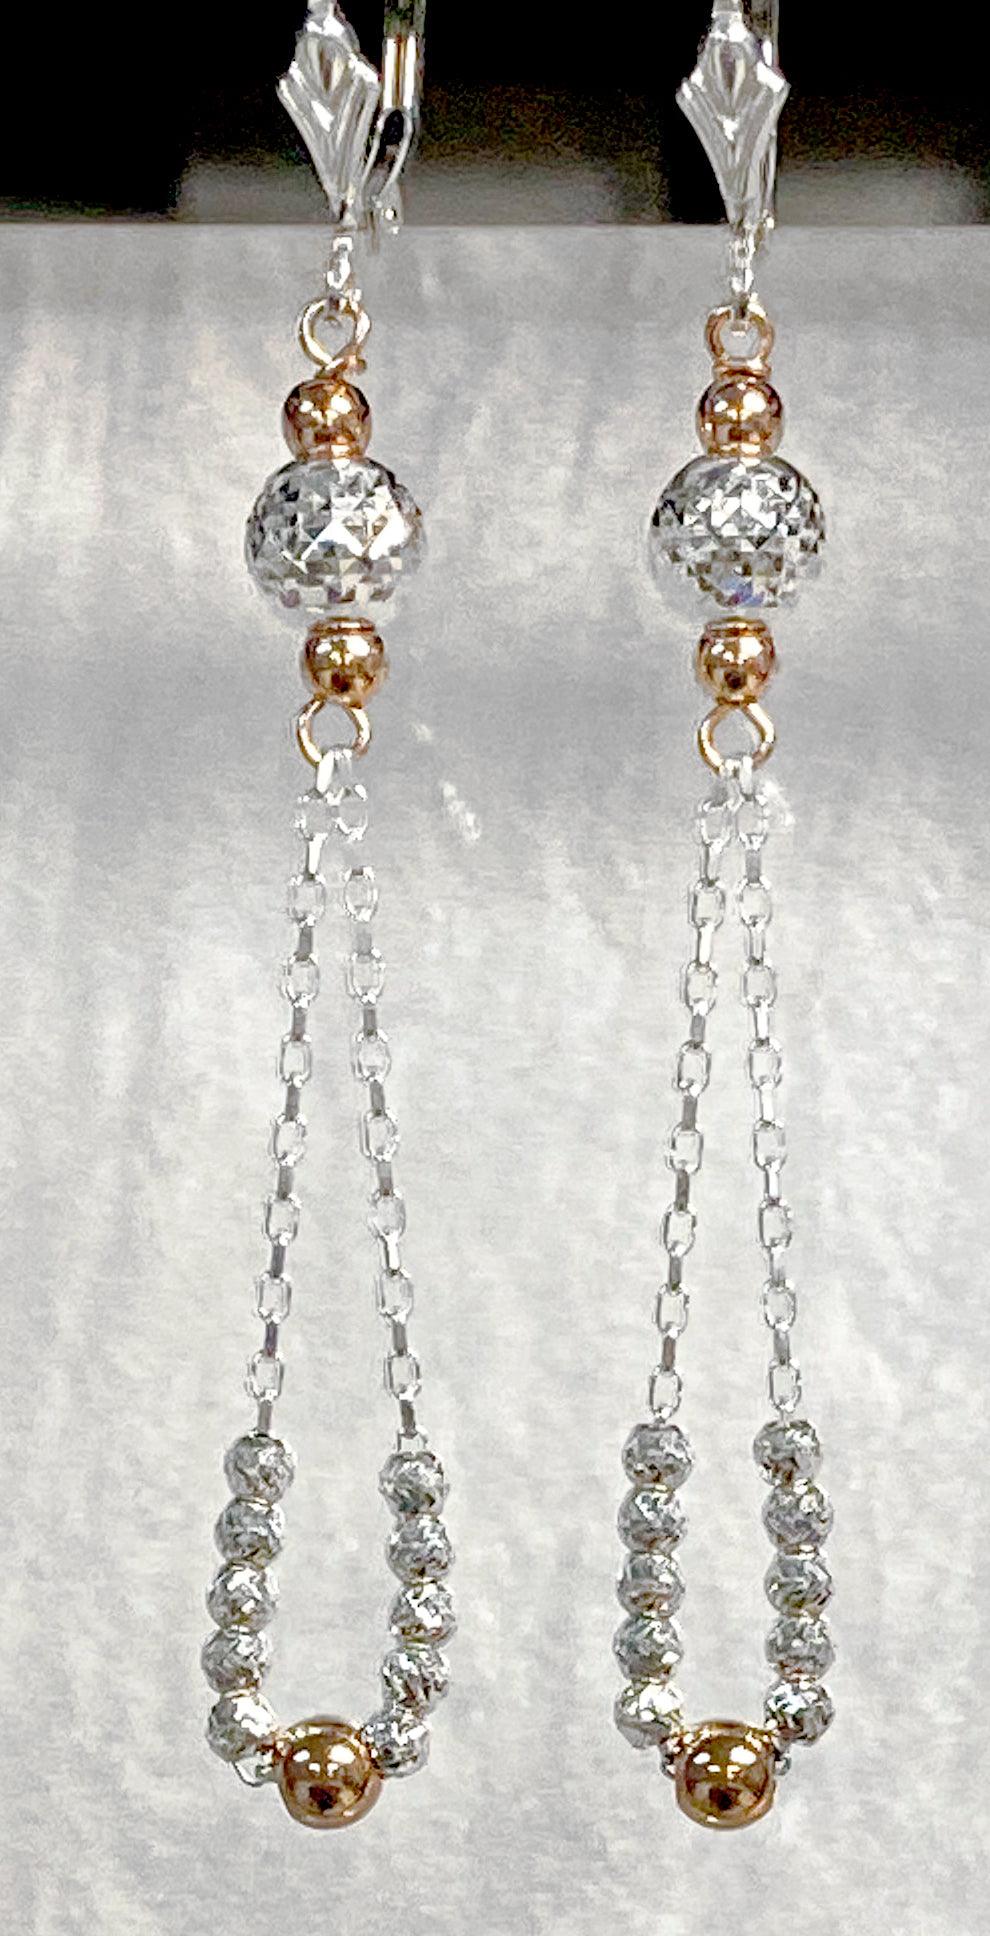 Minimalist Metals Earring Kit - Too Cute Beads